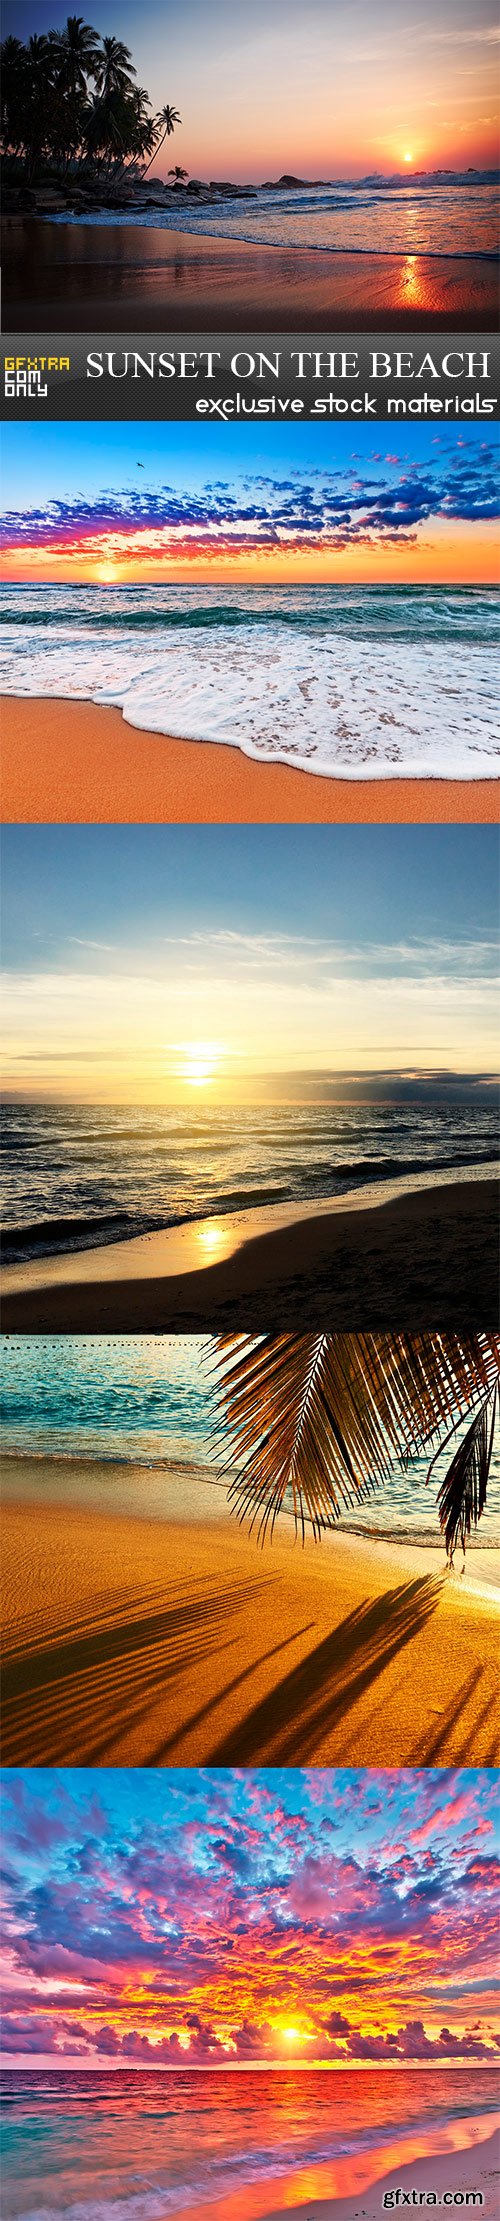 Sunset on the beach - 5UHQ JPEG